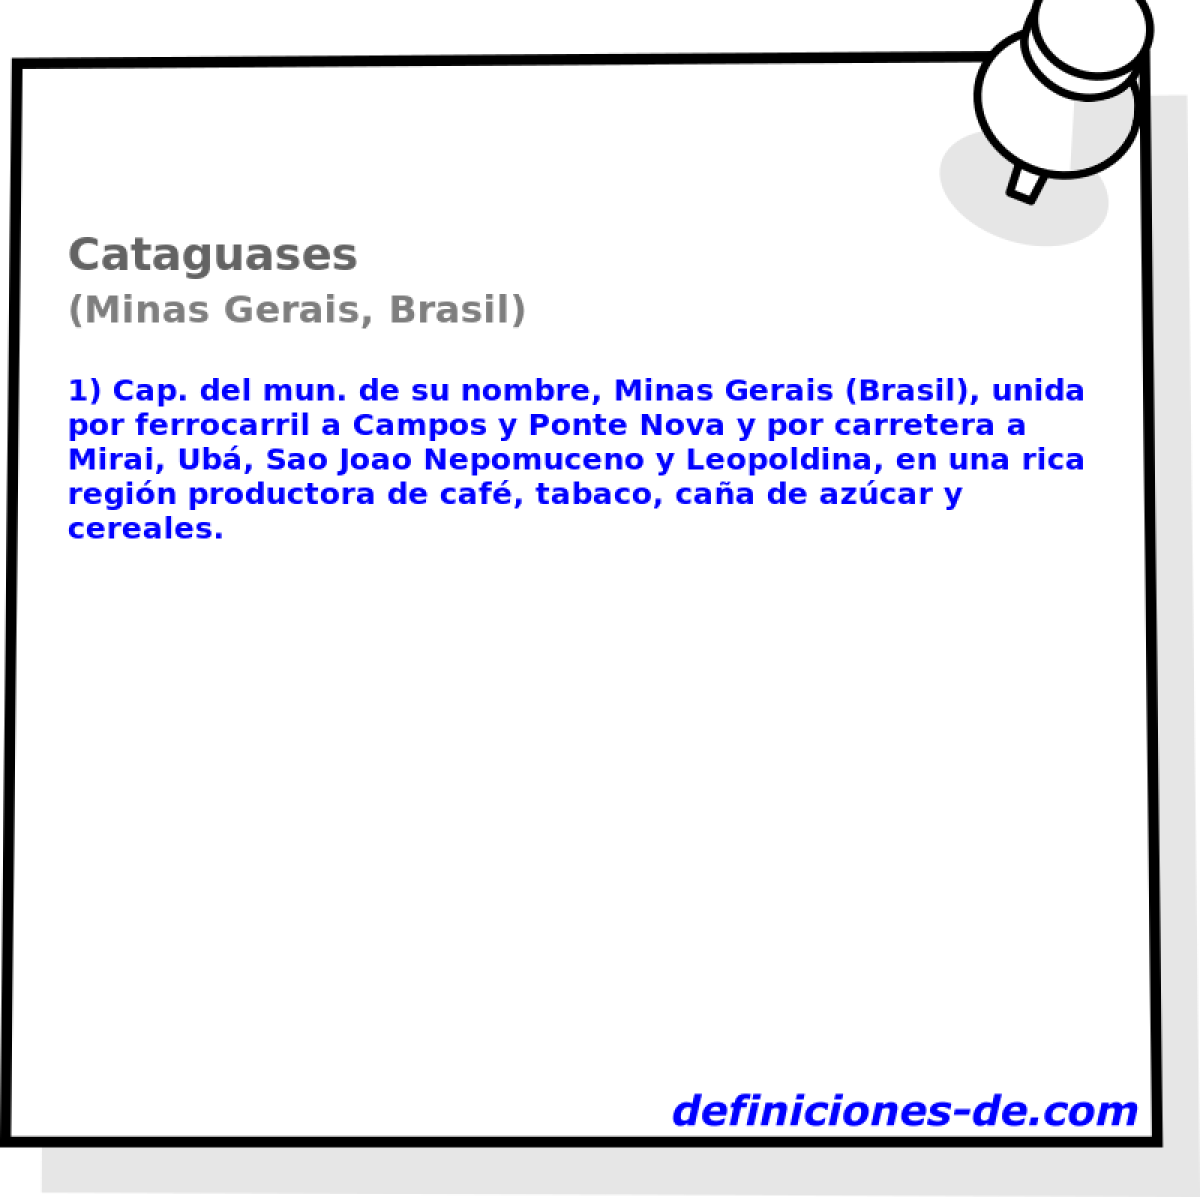 Cataguases (Minas Gerais, Brasil)